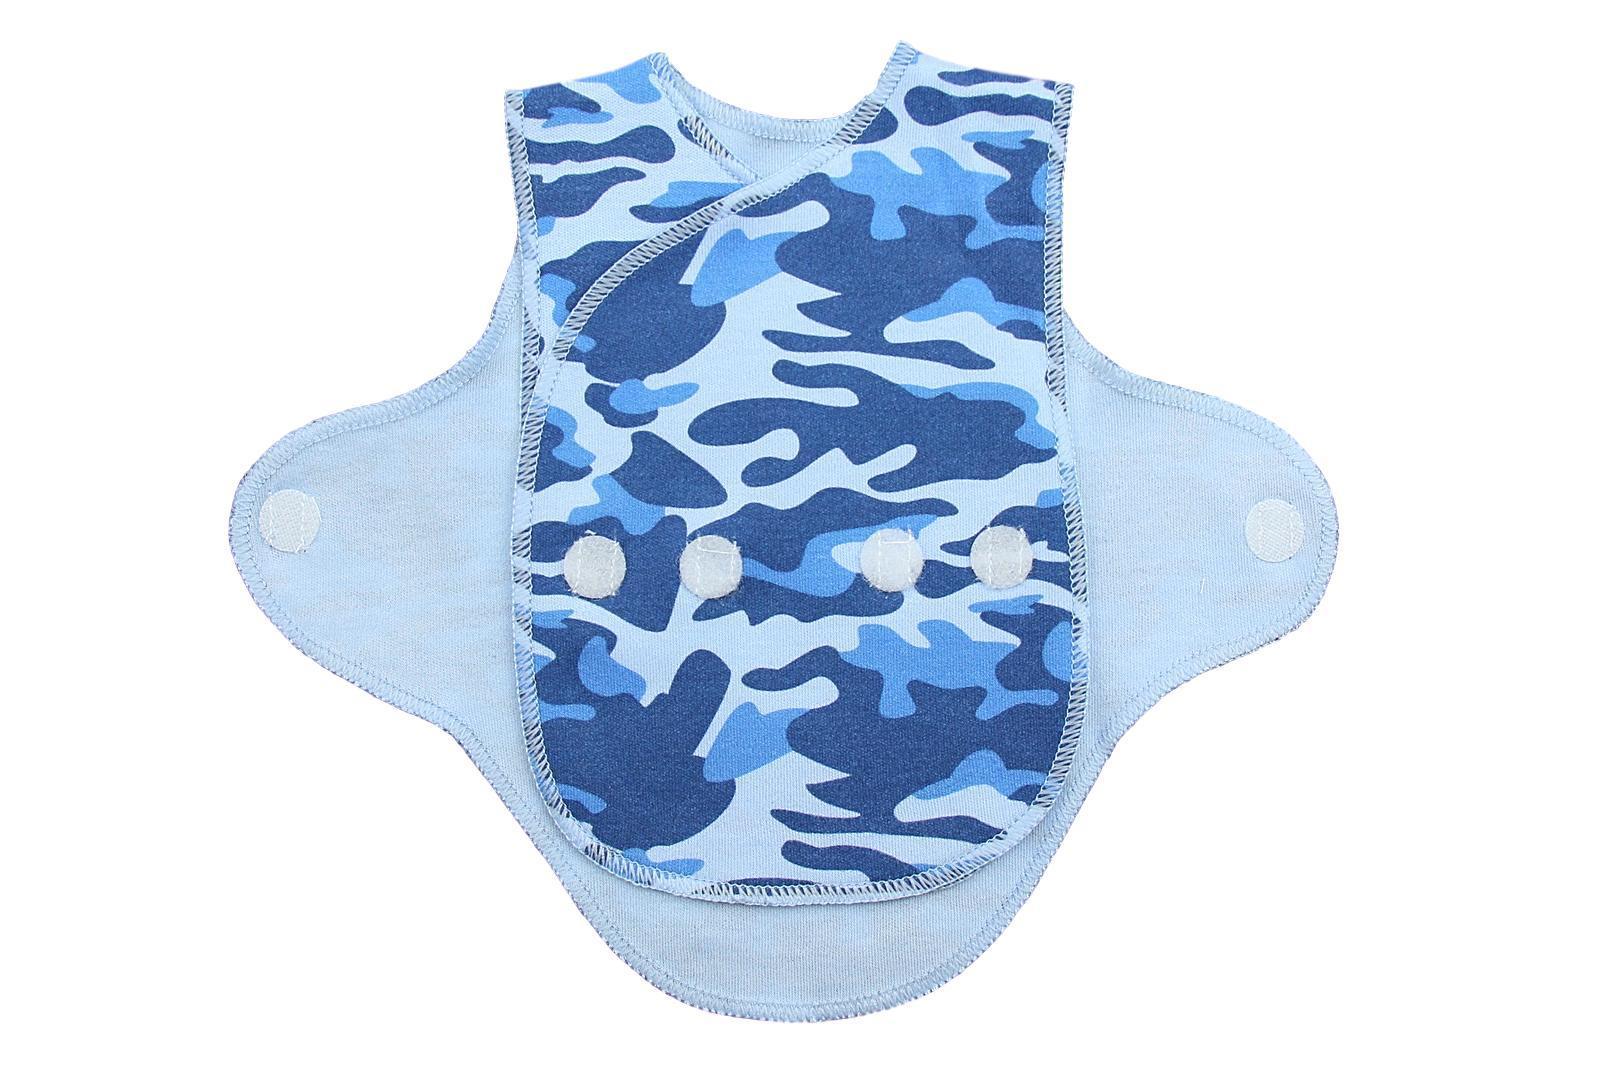 Preemie Wrap Set // Blue Camo-Preemie Clothing-UniqueKidz